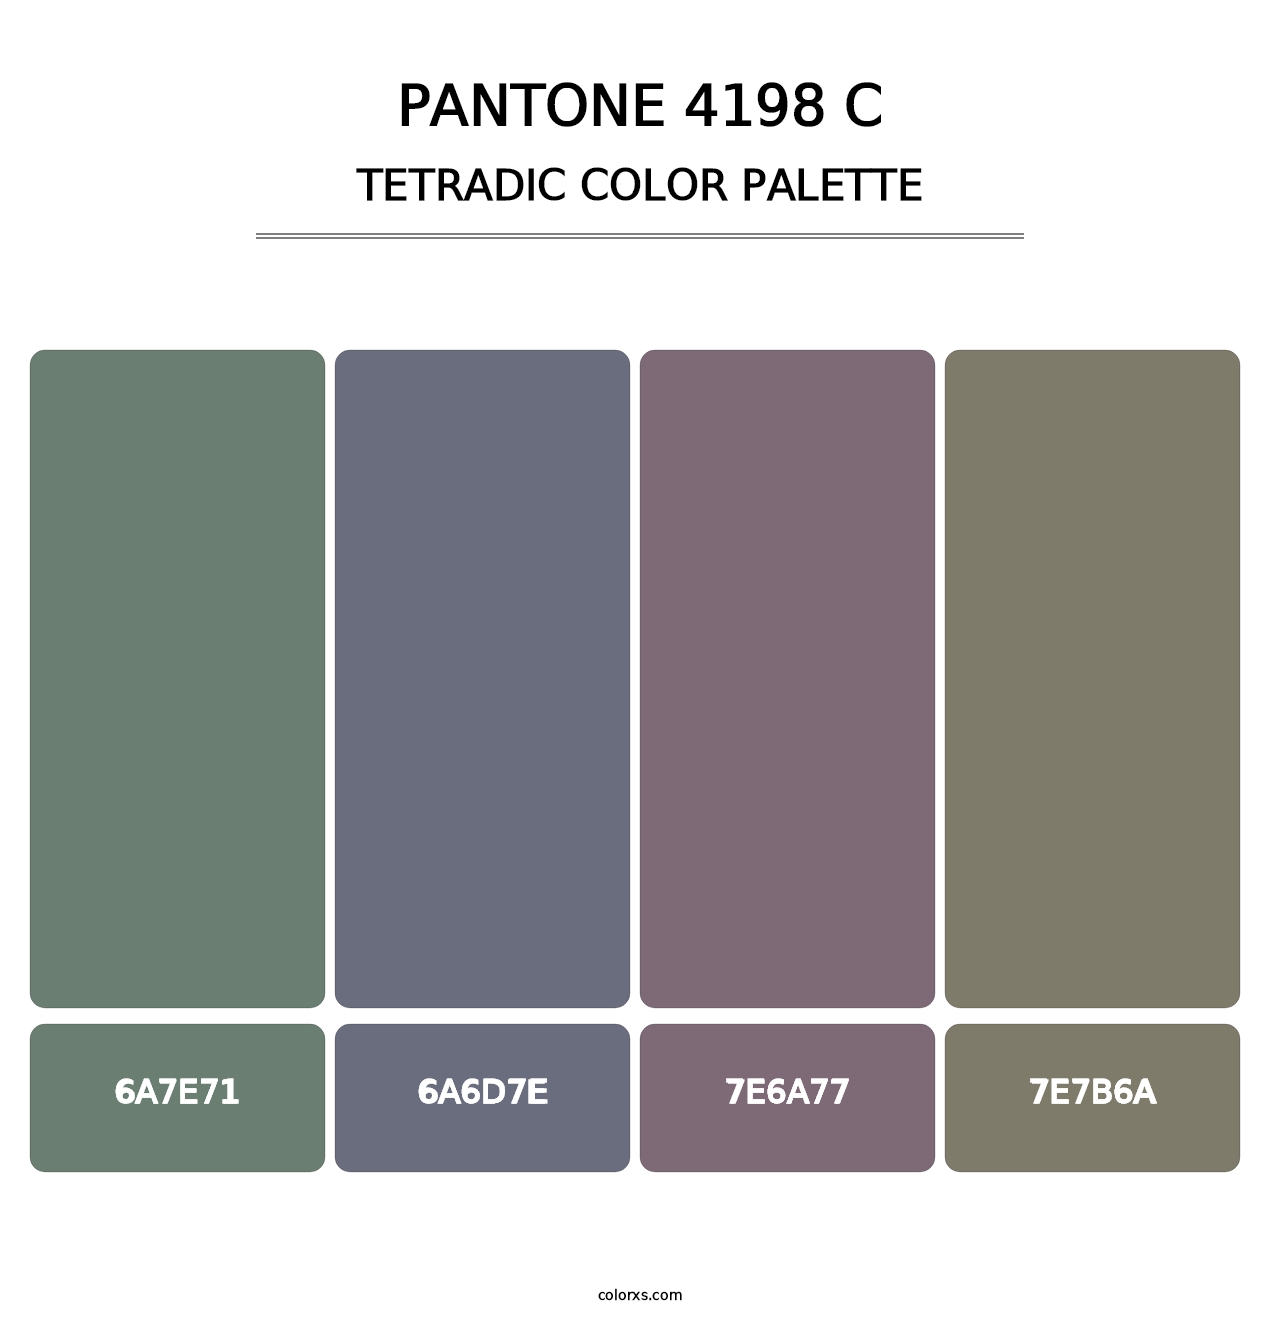 PANTONE 4198 C - Tetradic Color Palette